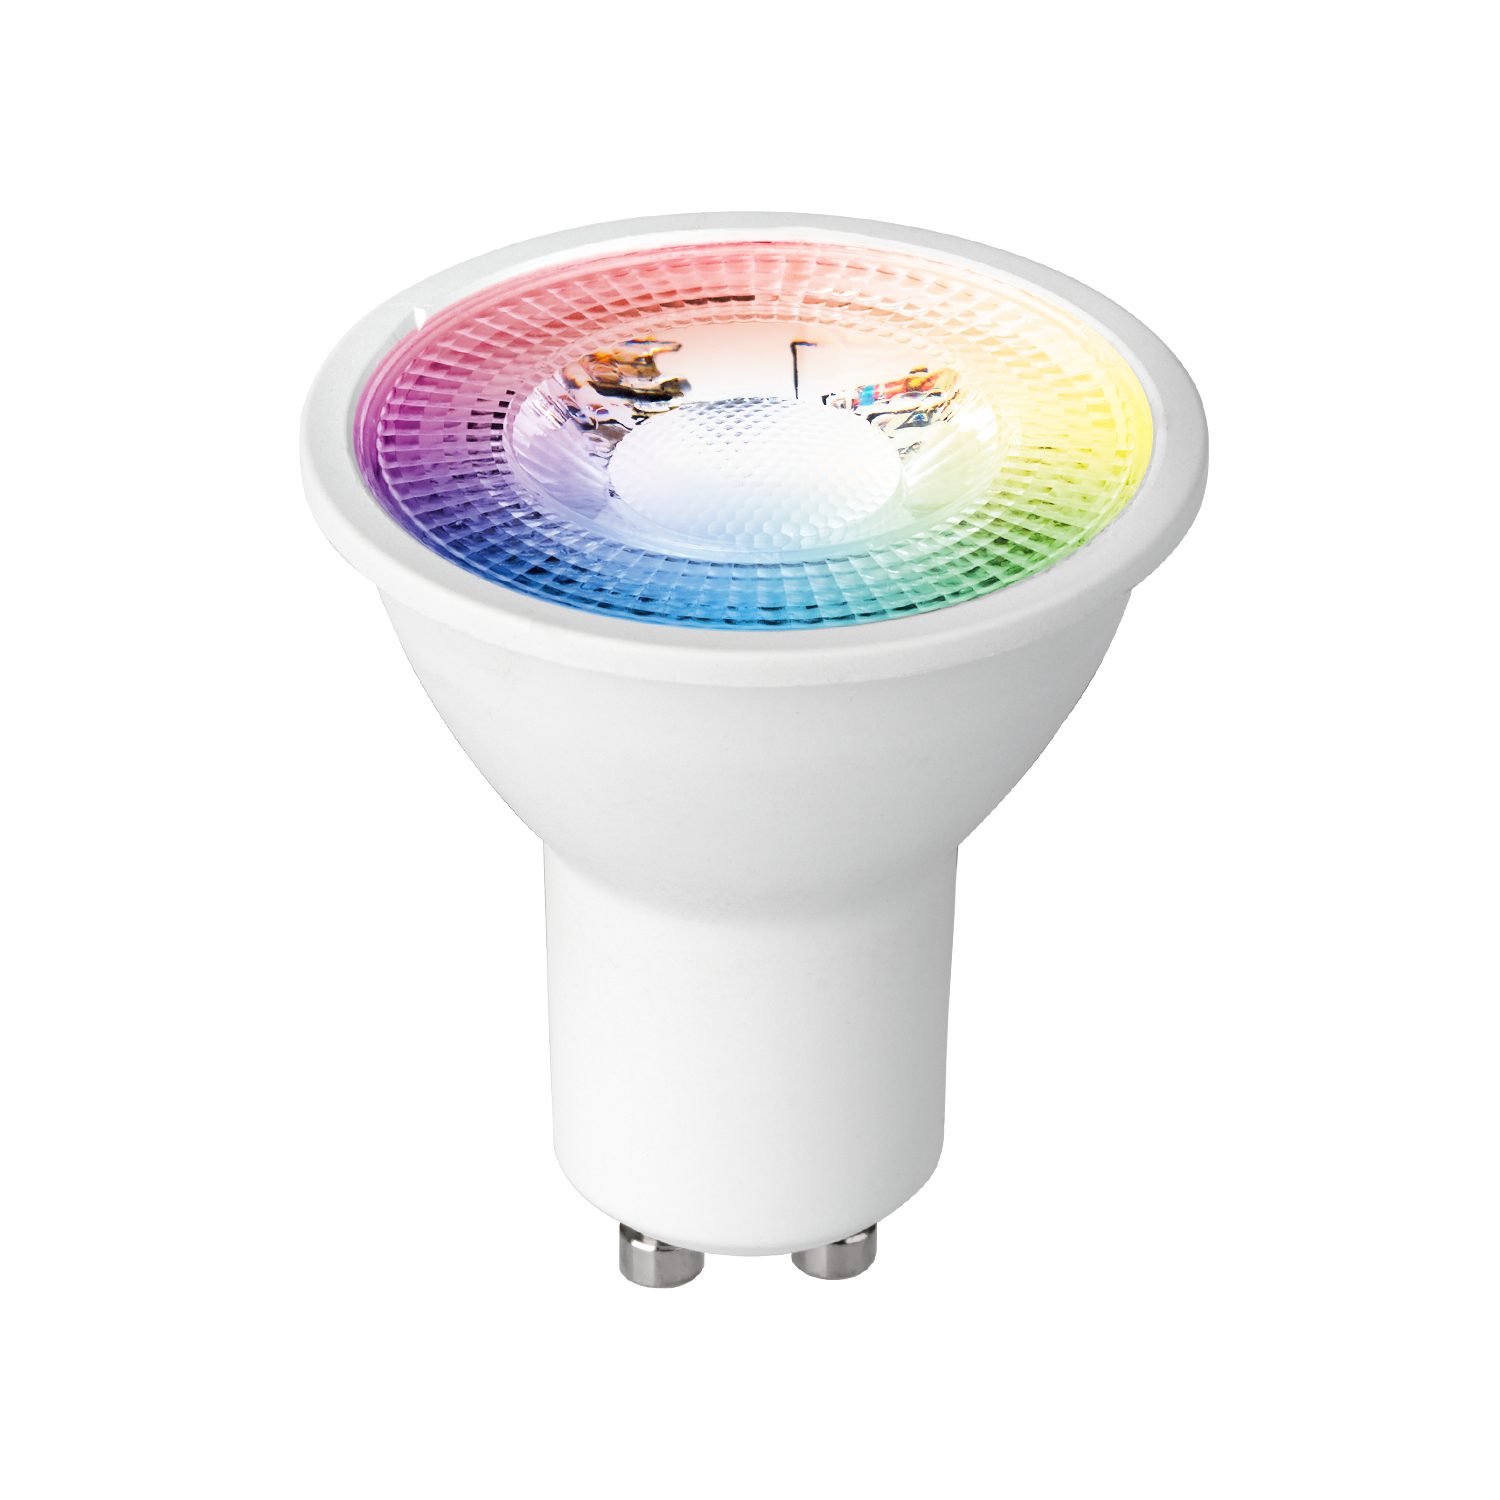 LEDANDO LED Einbaustrahler 10er von in 3W LED GU10 IP44 Einbaustrahler LED Set mit RGB LEDAN weiß